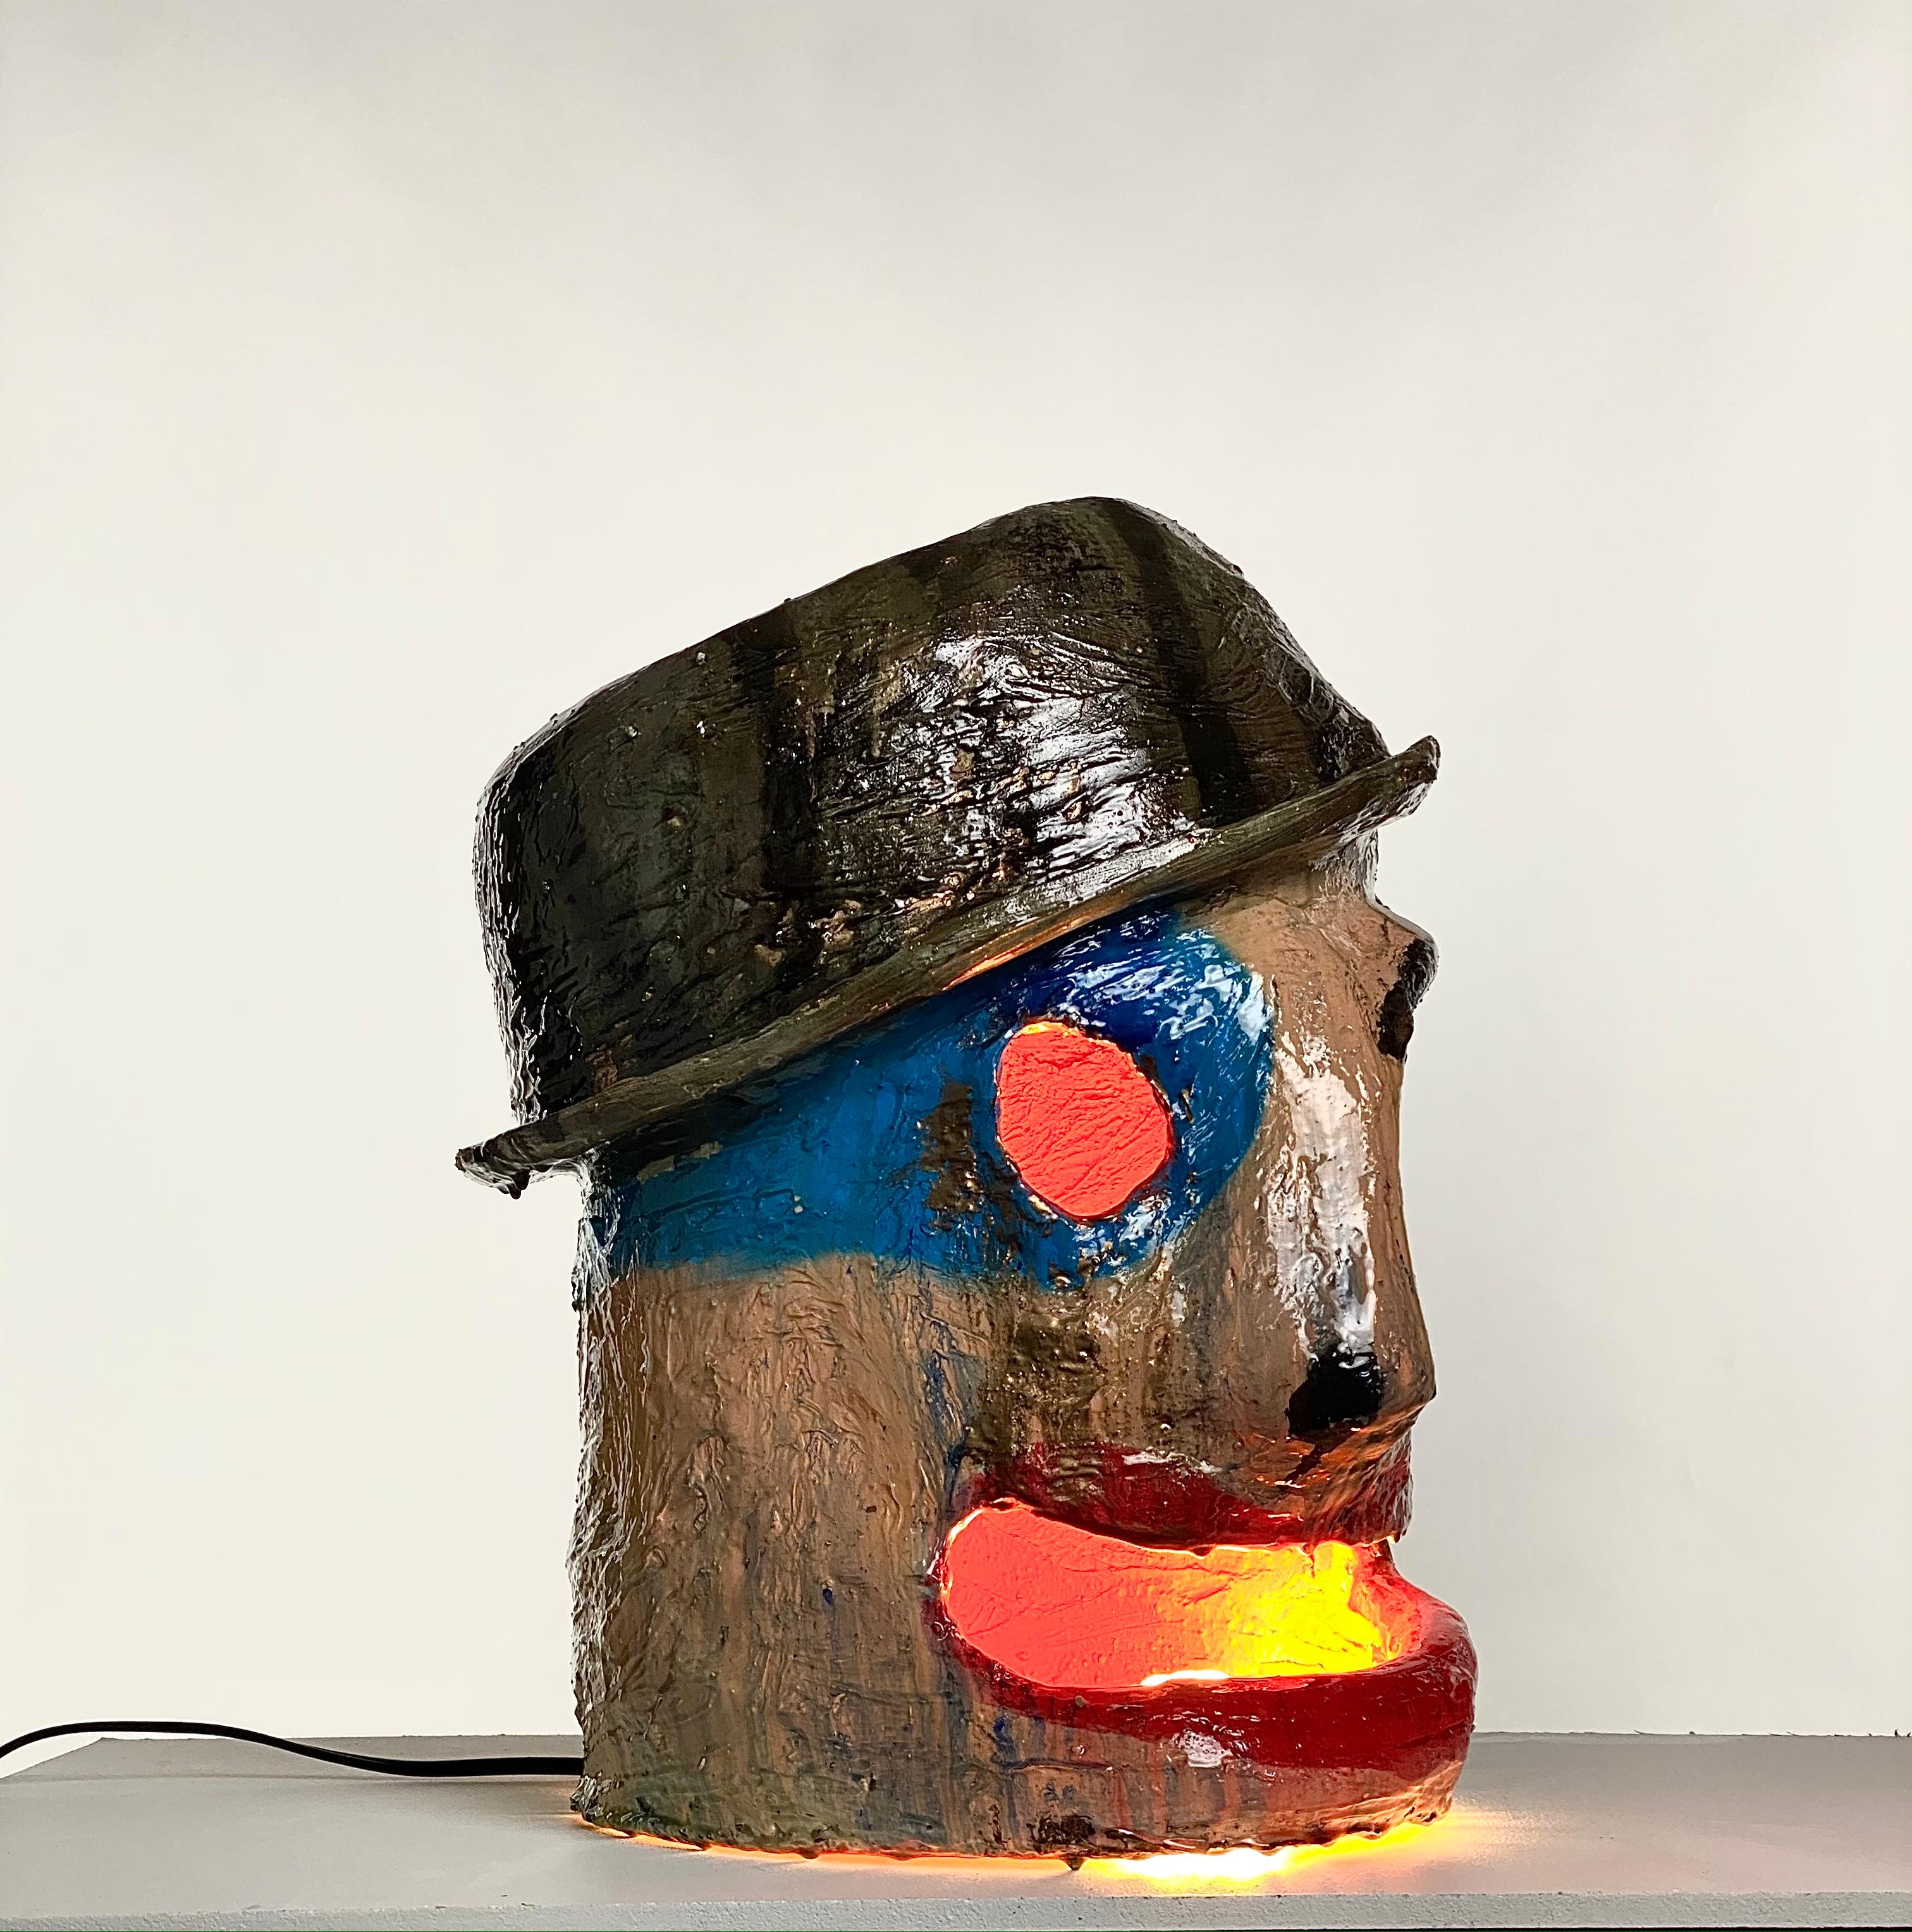 American Multicolor Face Sculptural Plaster Table Lamp, 21st Century by Mattia Biagi For Sale